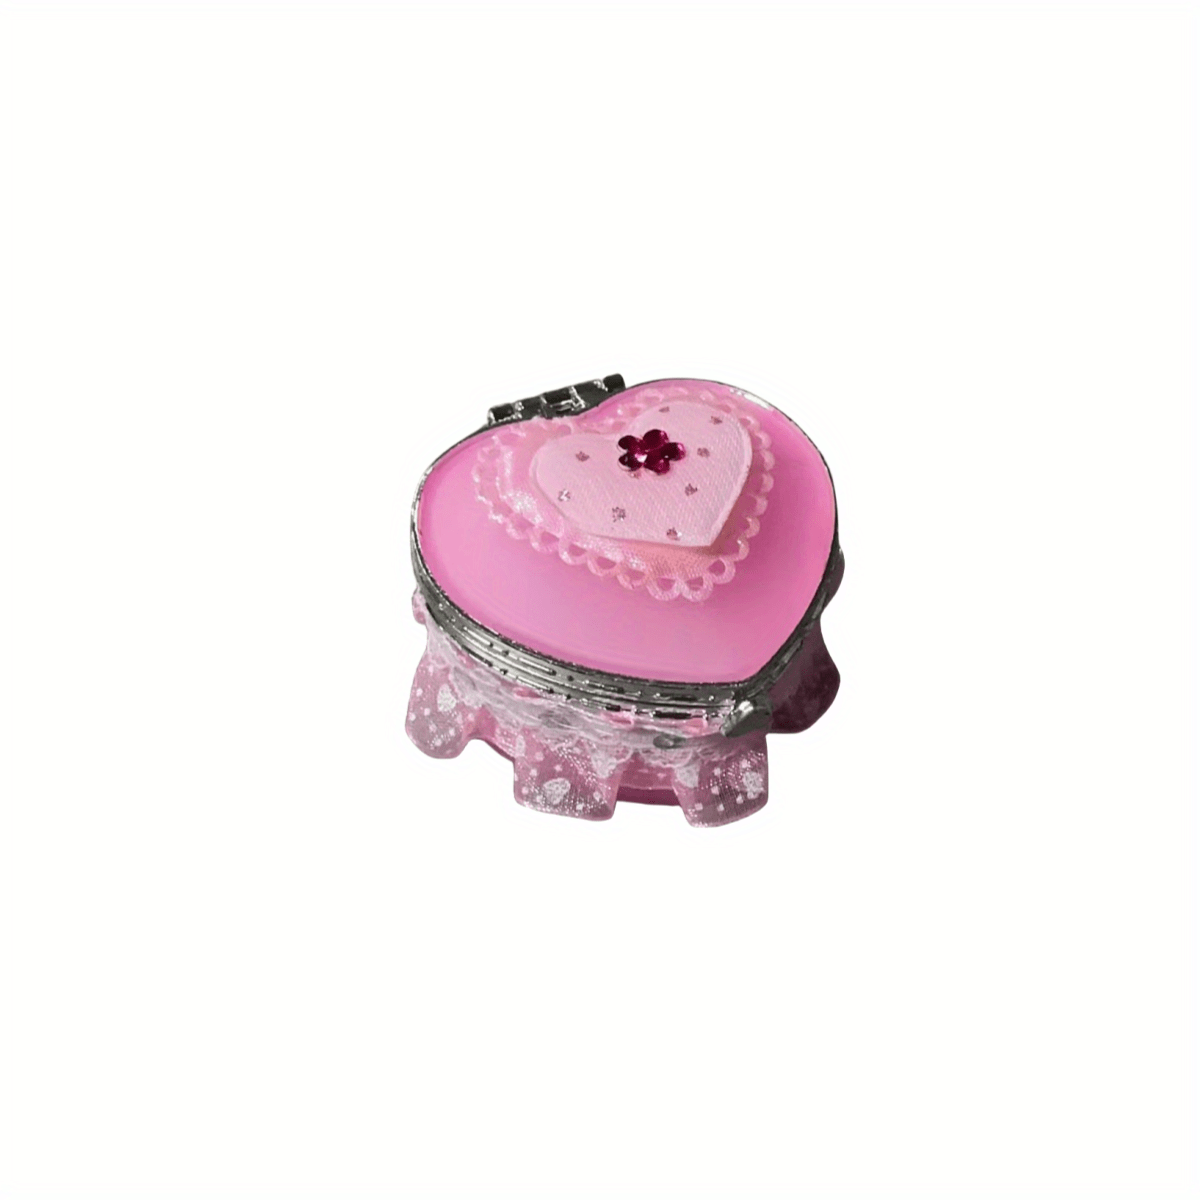 Plastic Nail Jewelry Storage Box Pink Love Heart Shape With